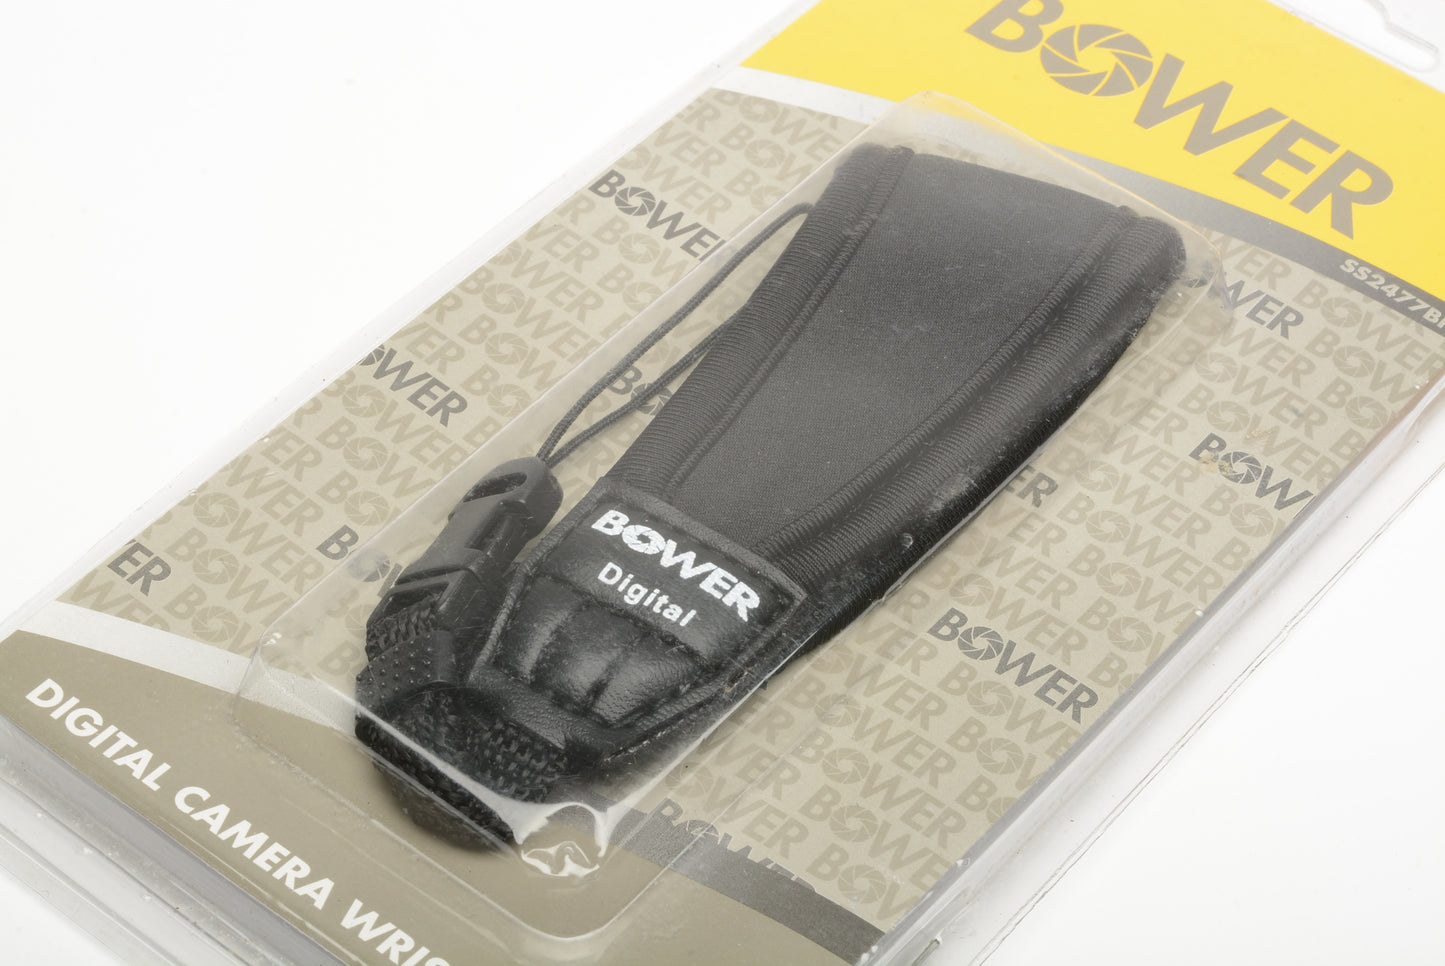 Bower Neoprene Digital camera wrist strap - New